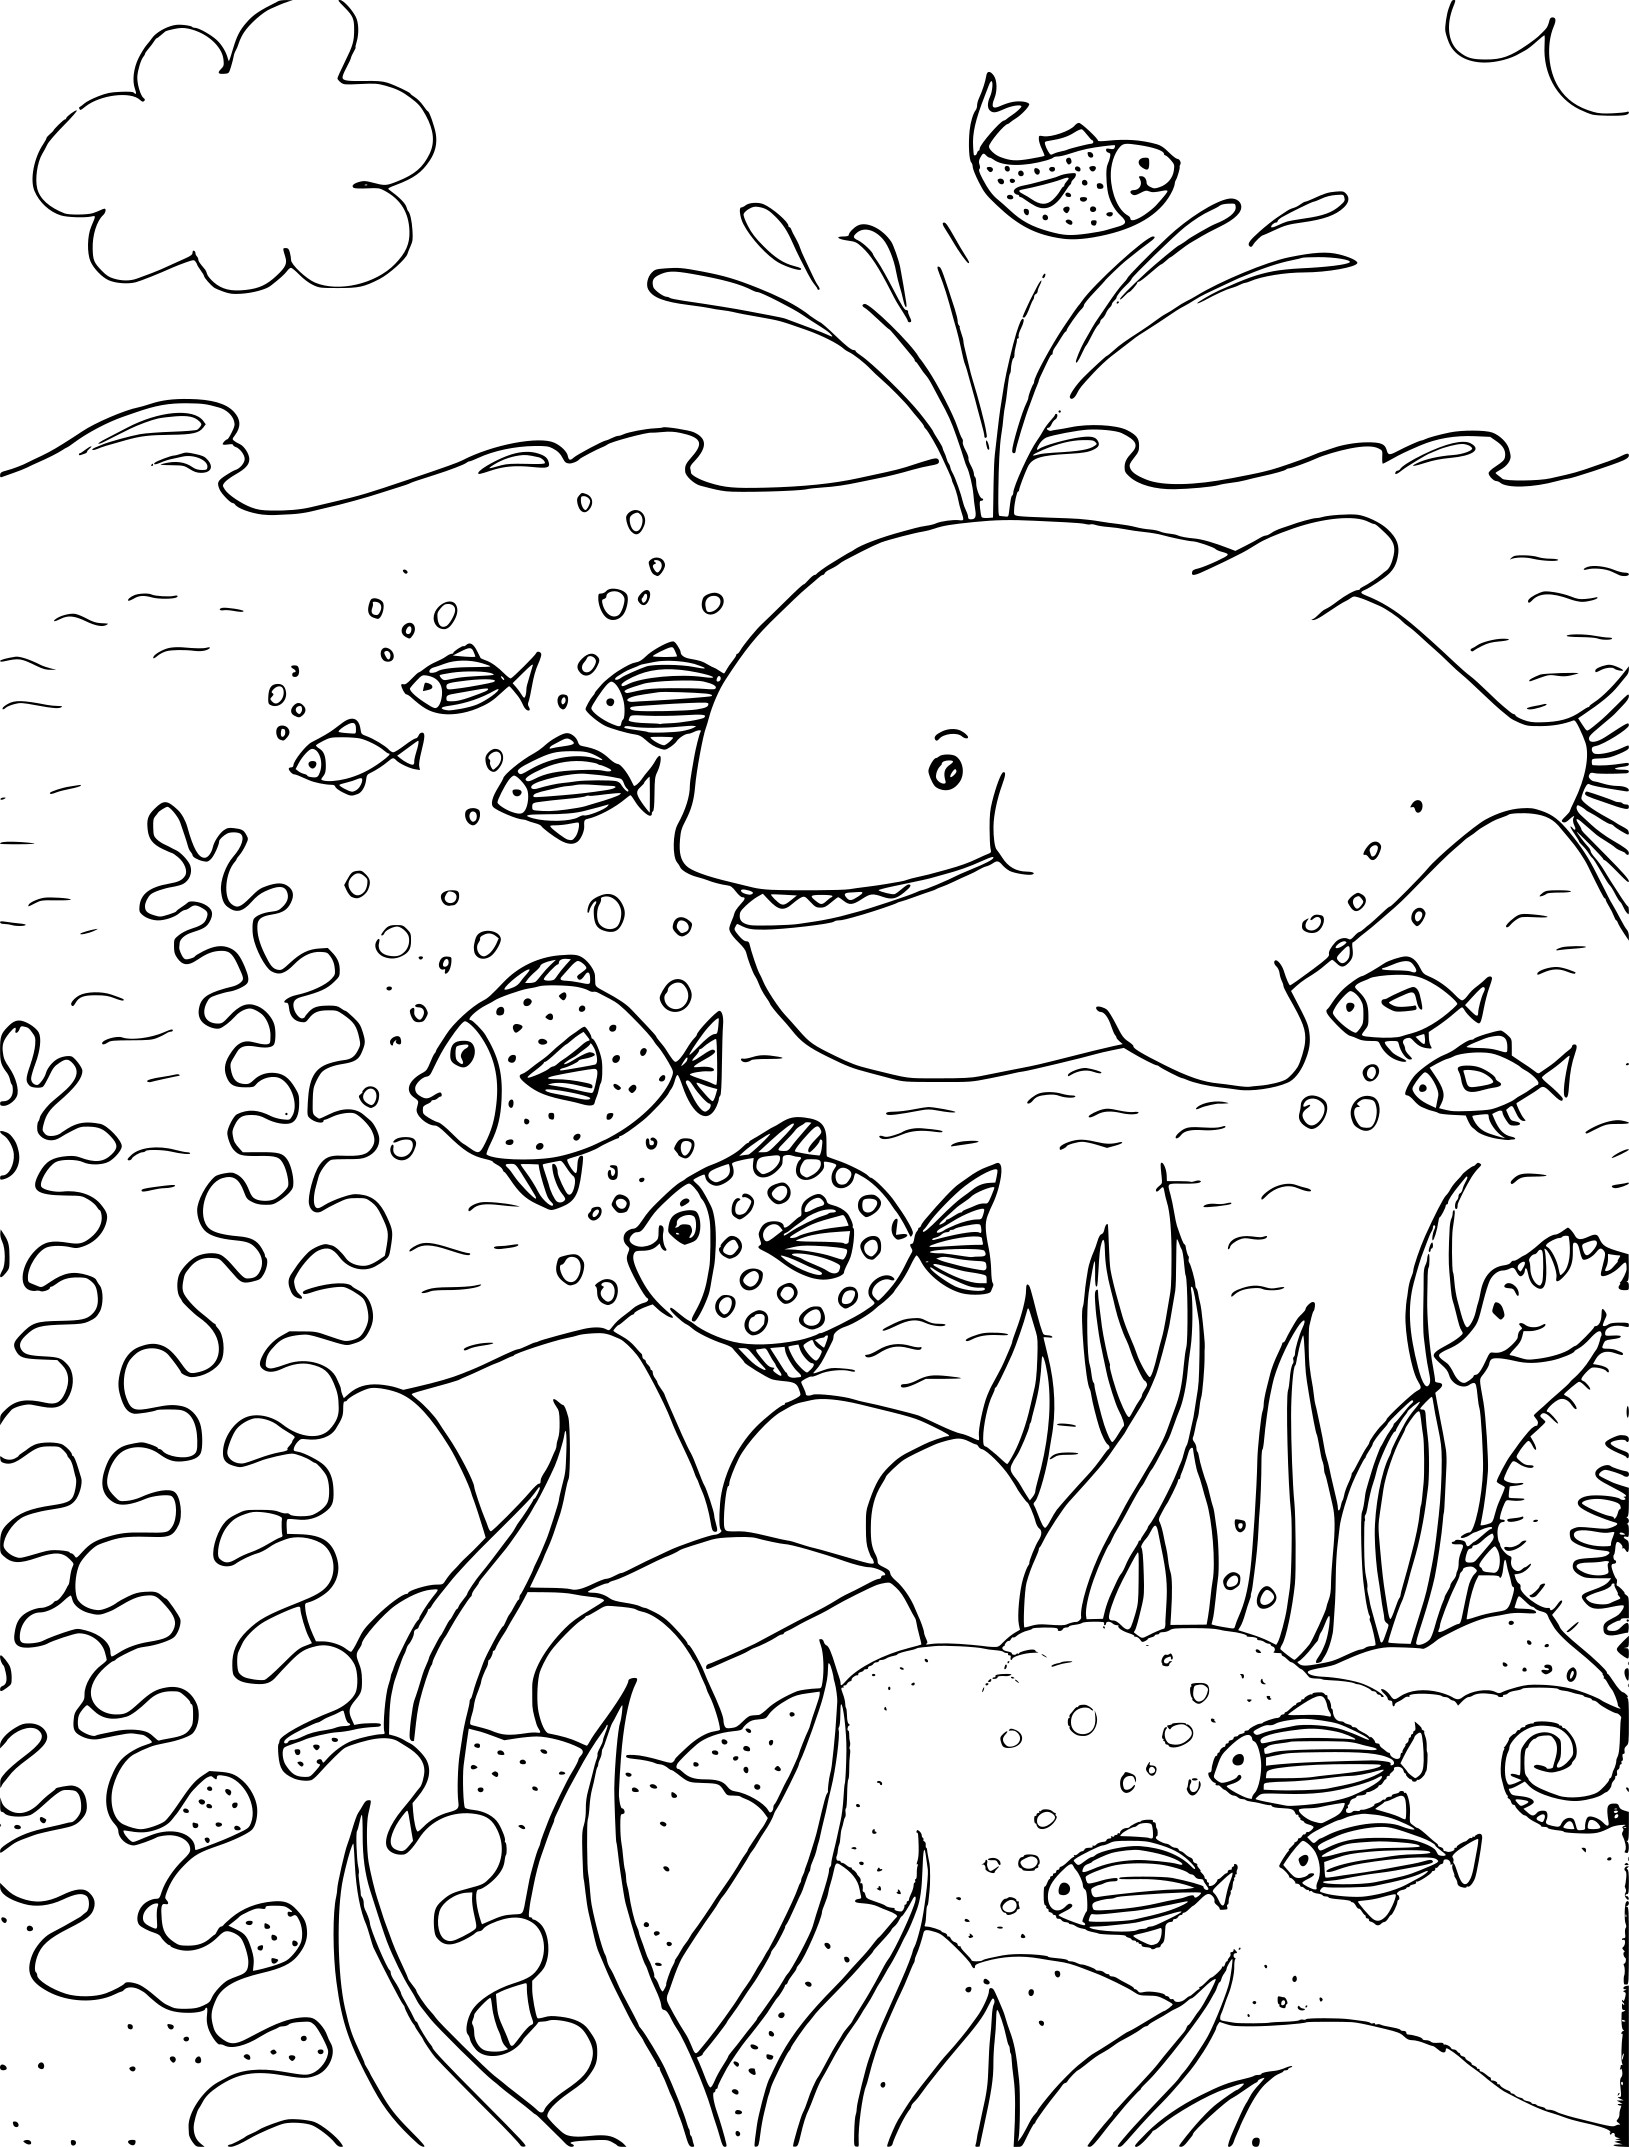 Aquatic Animals coloring page